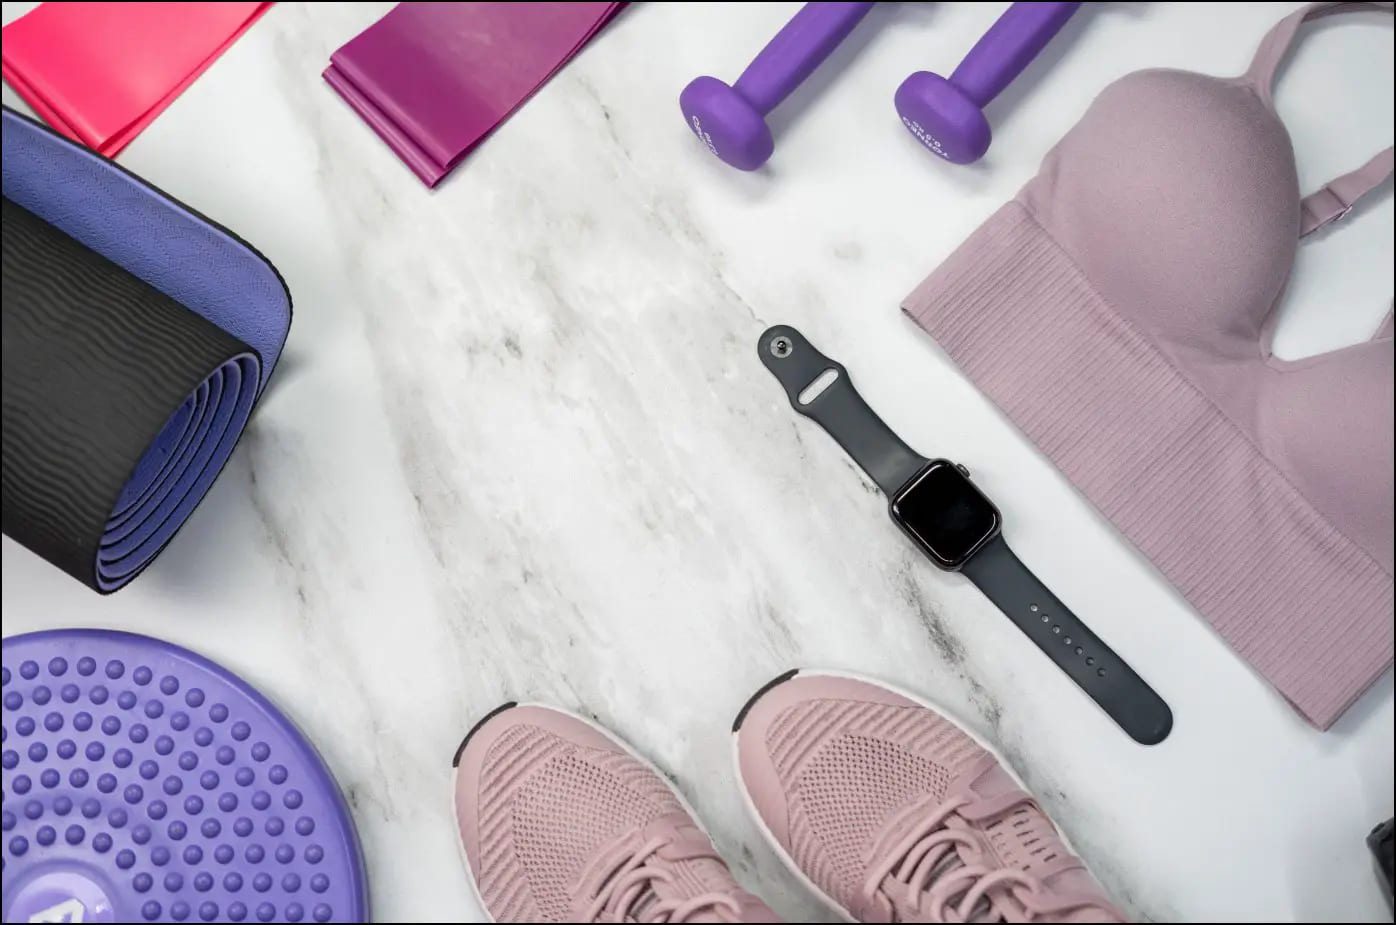 Smartwatch as a Daily Wearable, kept alongside Shoe and Yoga Mat